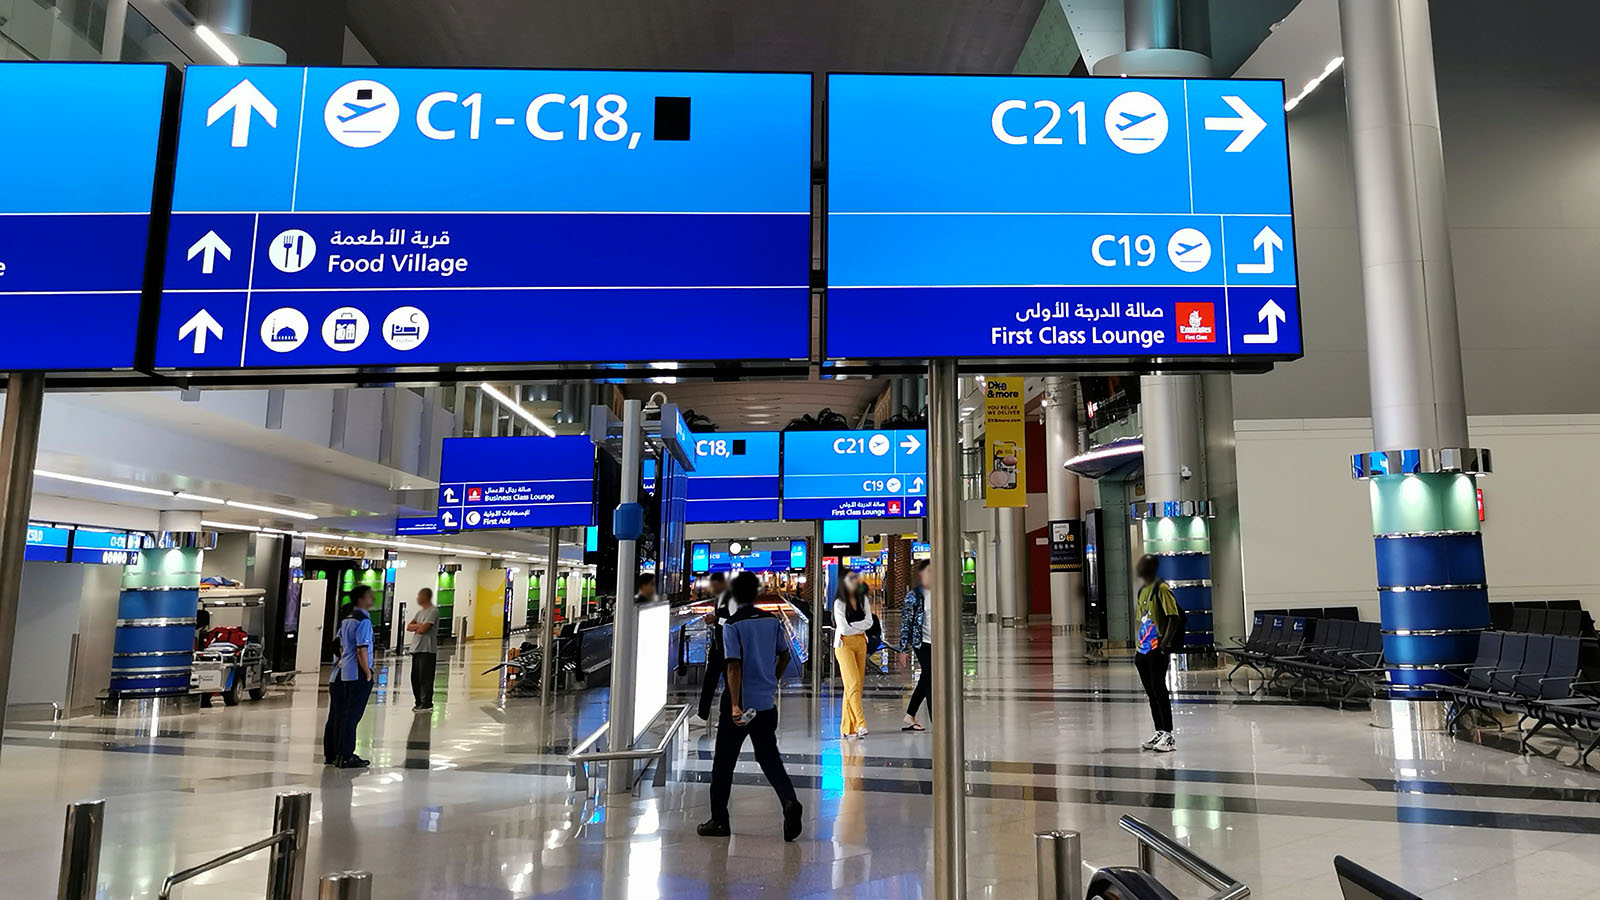 Signage towards the Emirates First Class Lounge, Dubai Concourse C